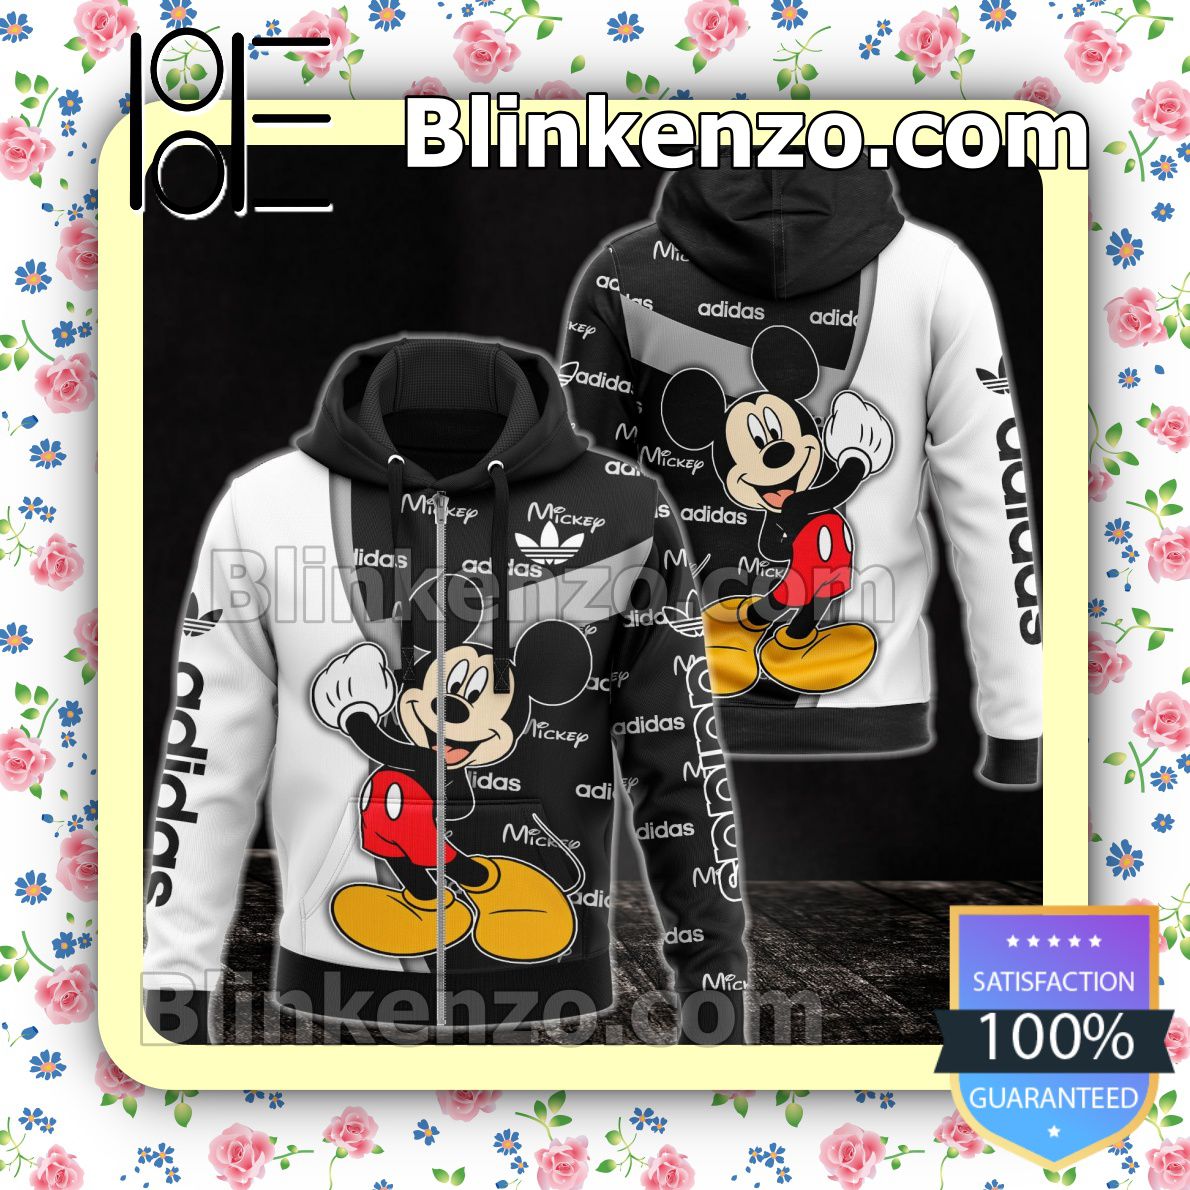 Drop Shipping Adidas Mickey Mouse Black And White Full-Zip Hooded Fleece Sweatshirt